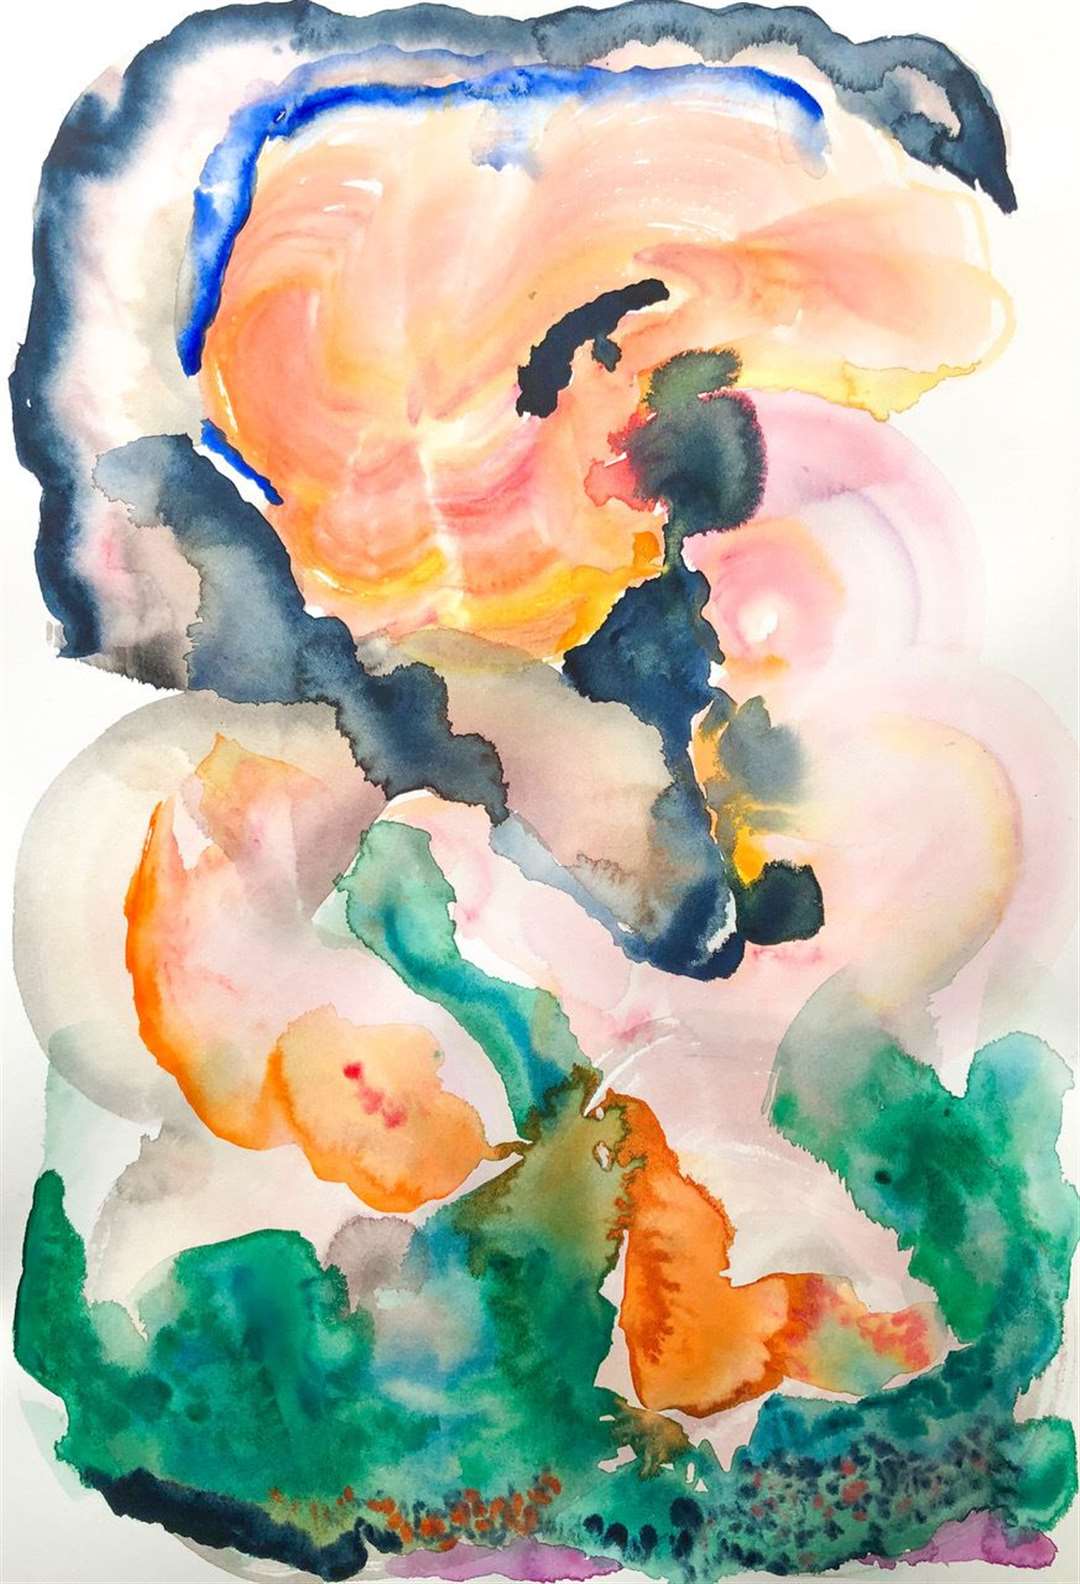 Preternatural Sunset, an example of Stephanie Fuller's 2020 works